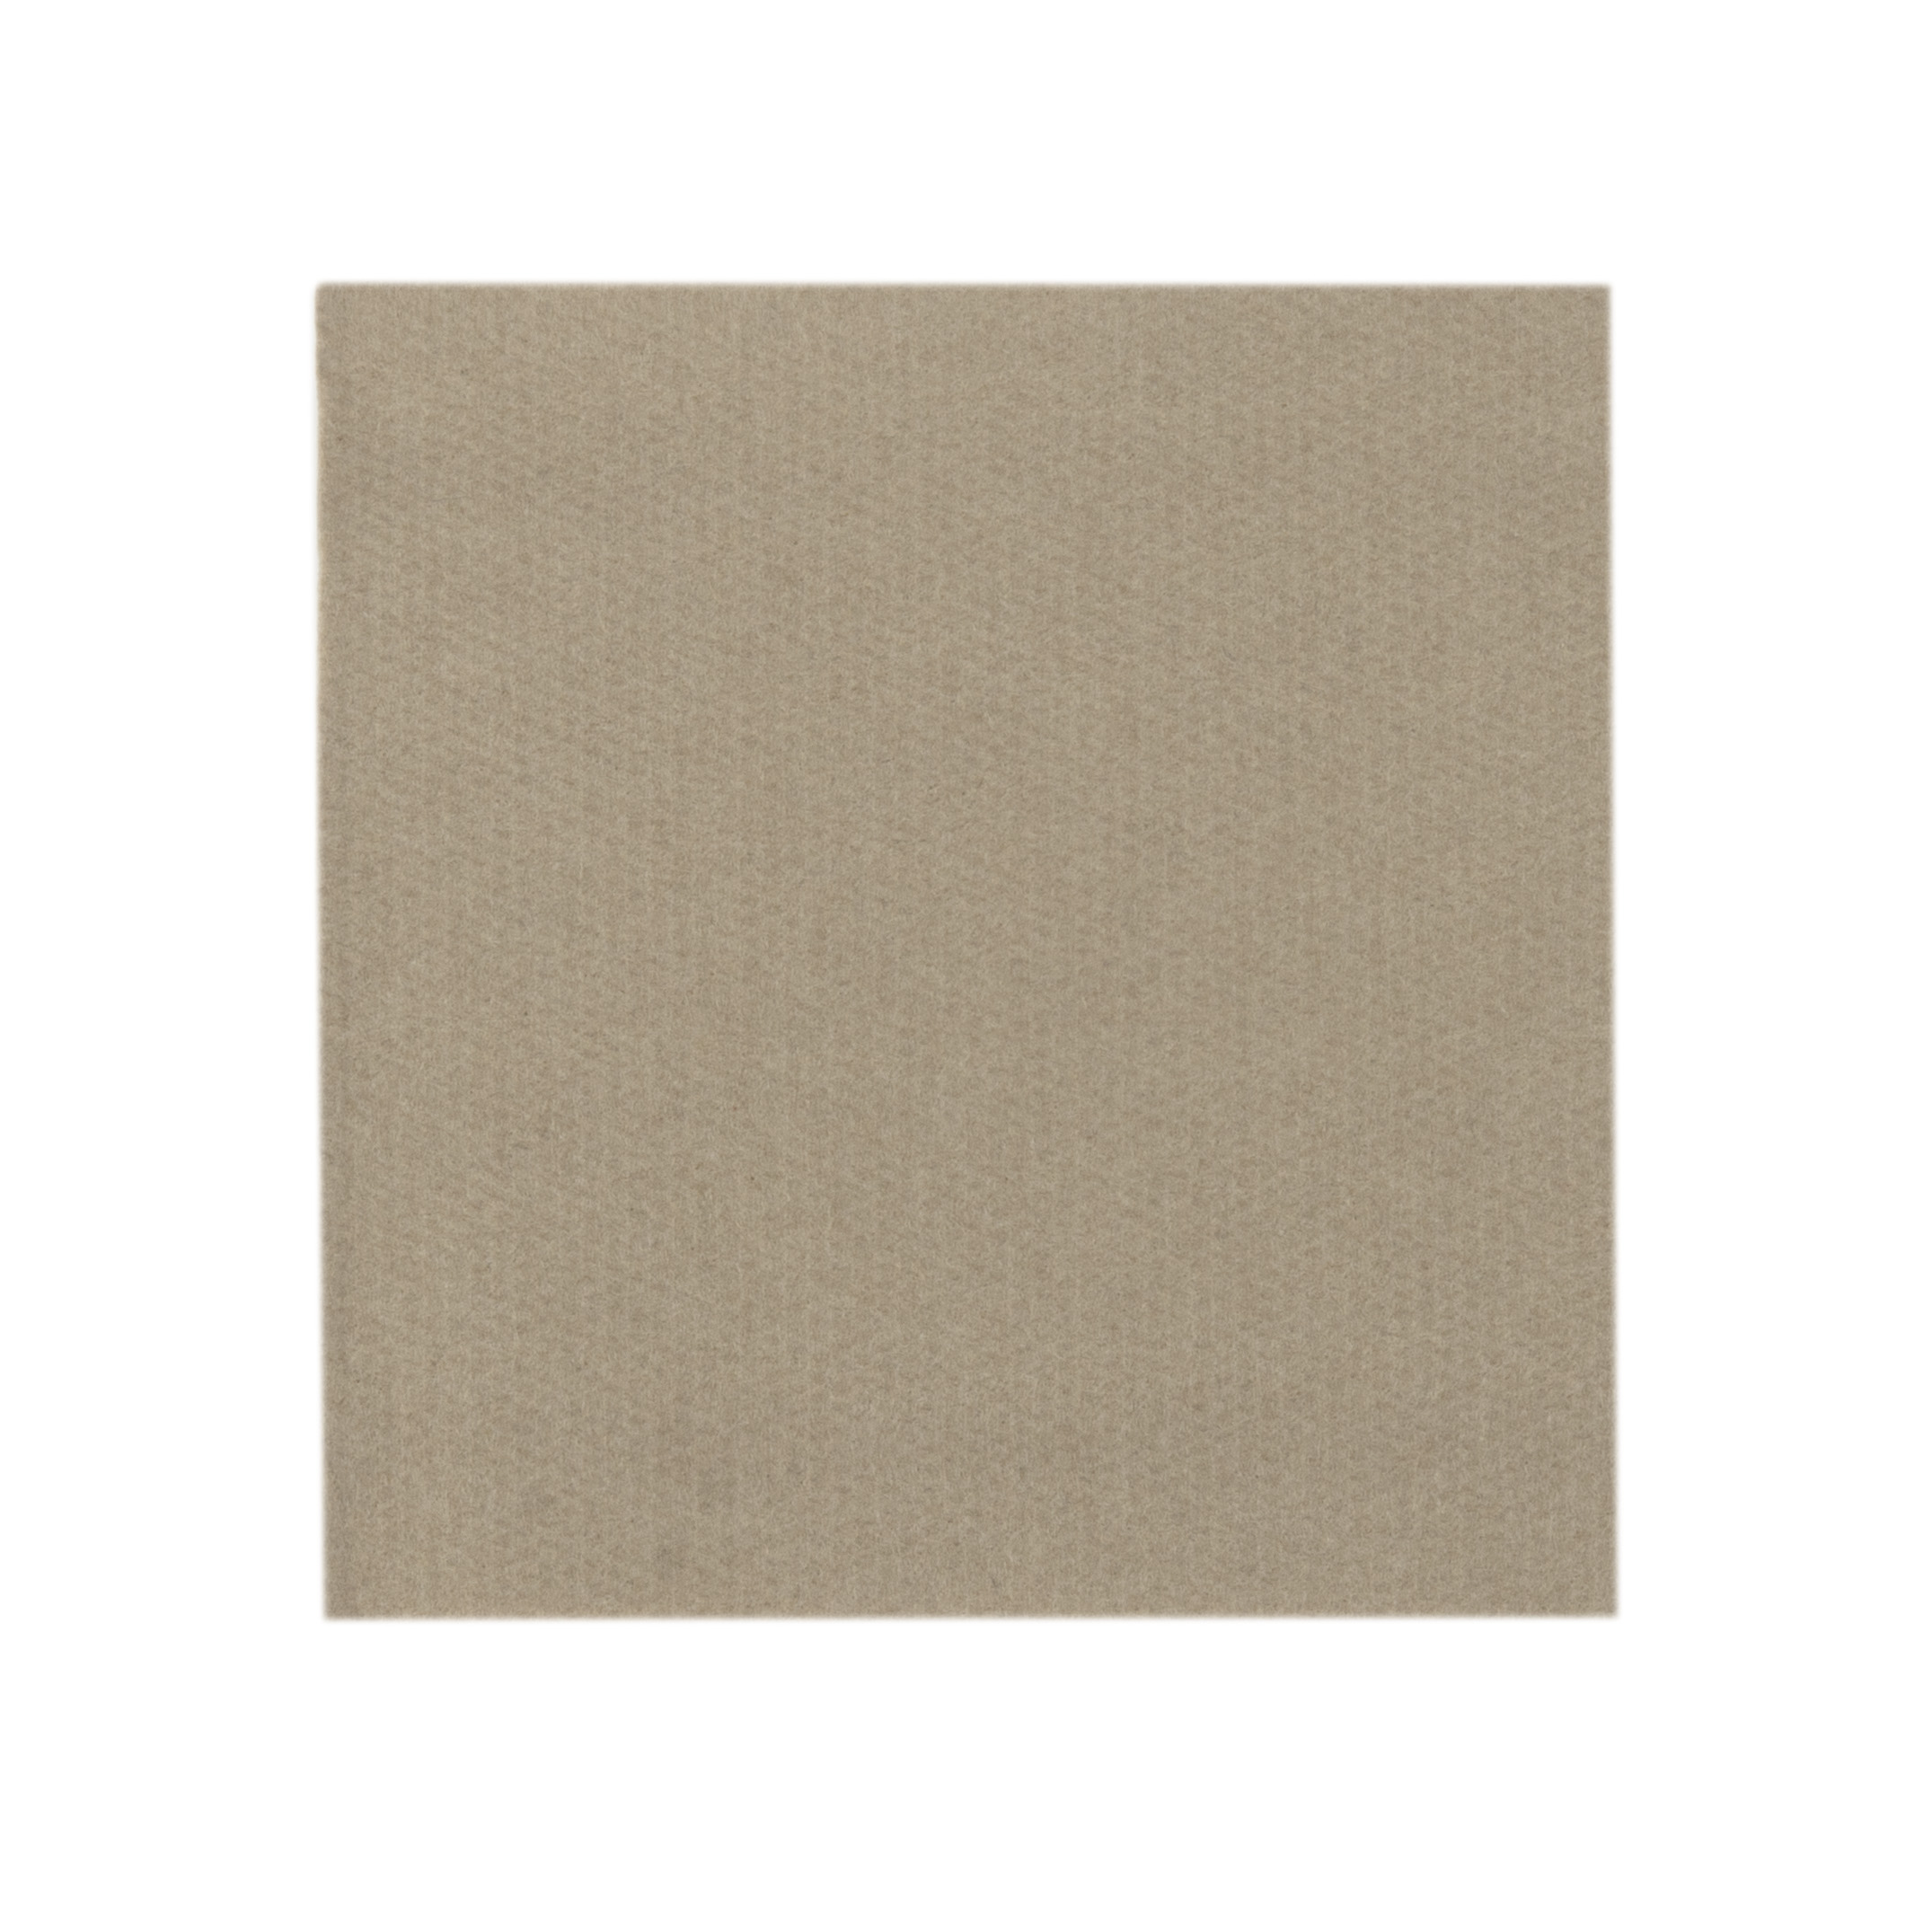 Mank Serviette Softpoint 1/4 Falz, 20 x 20 cm, Basic beige-grau